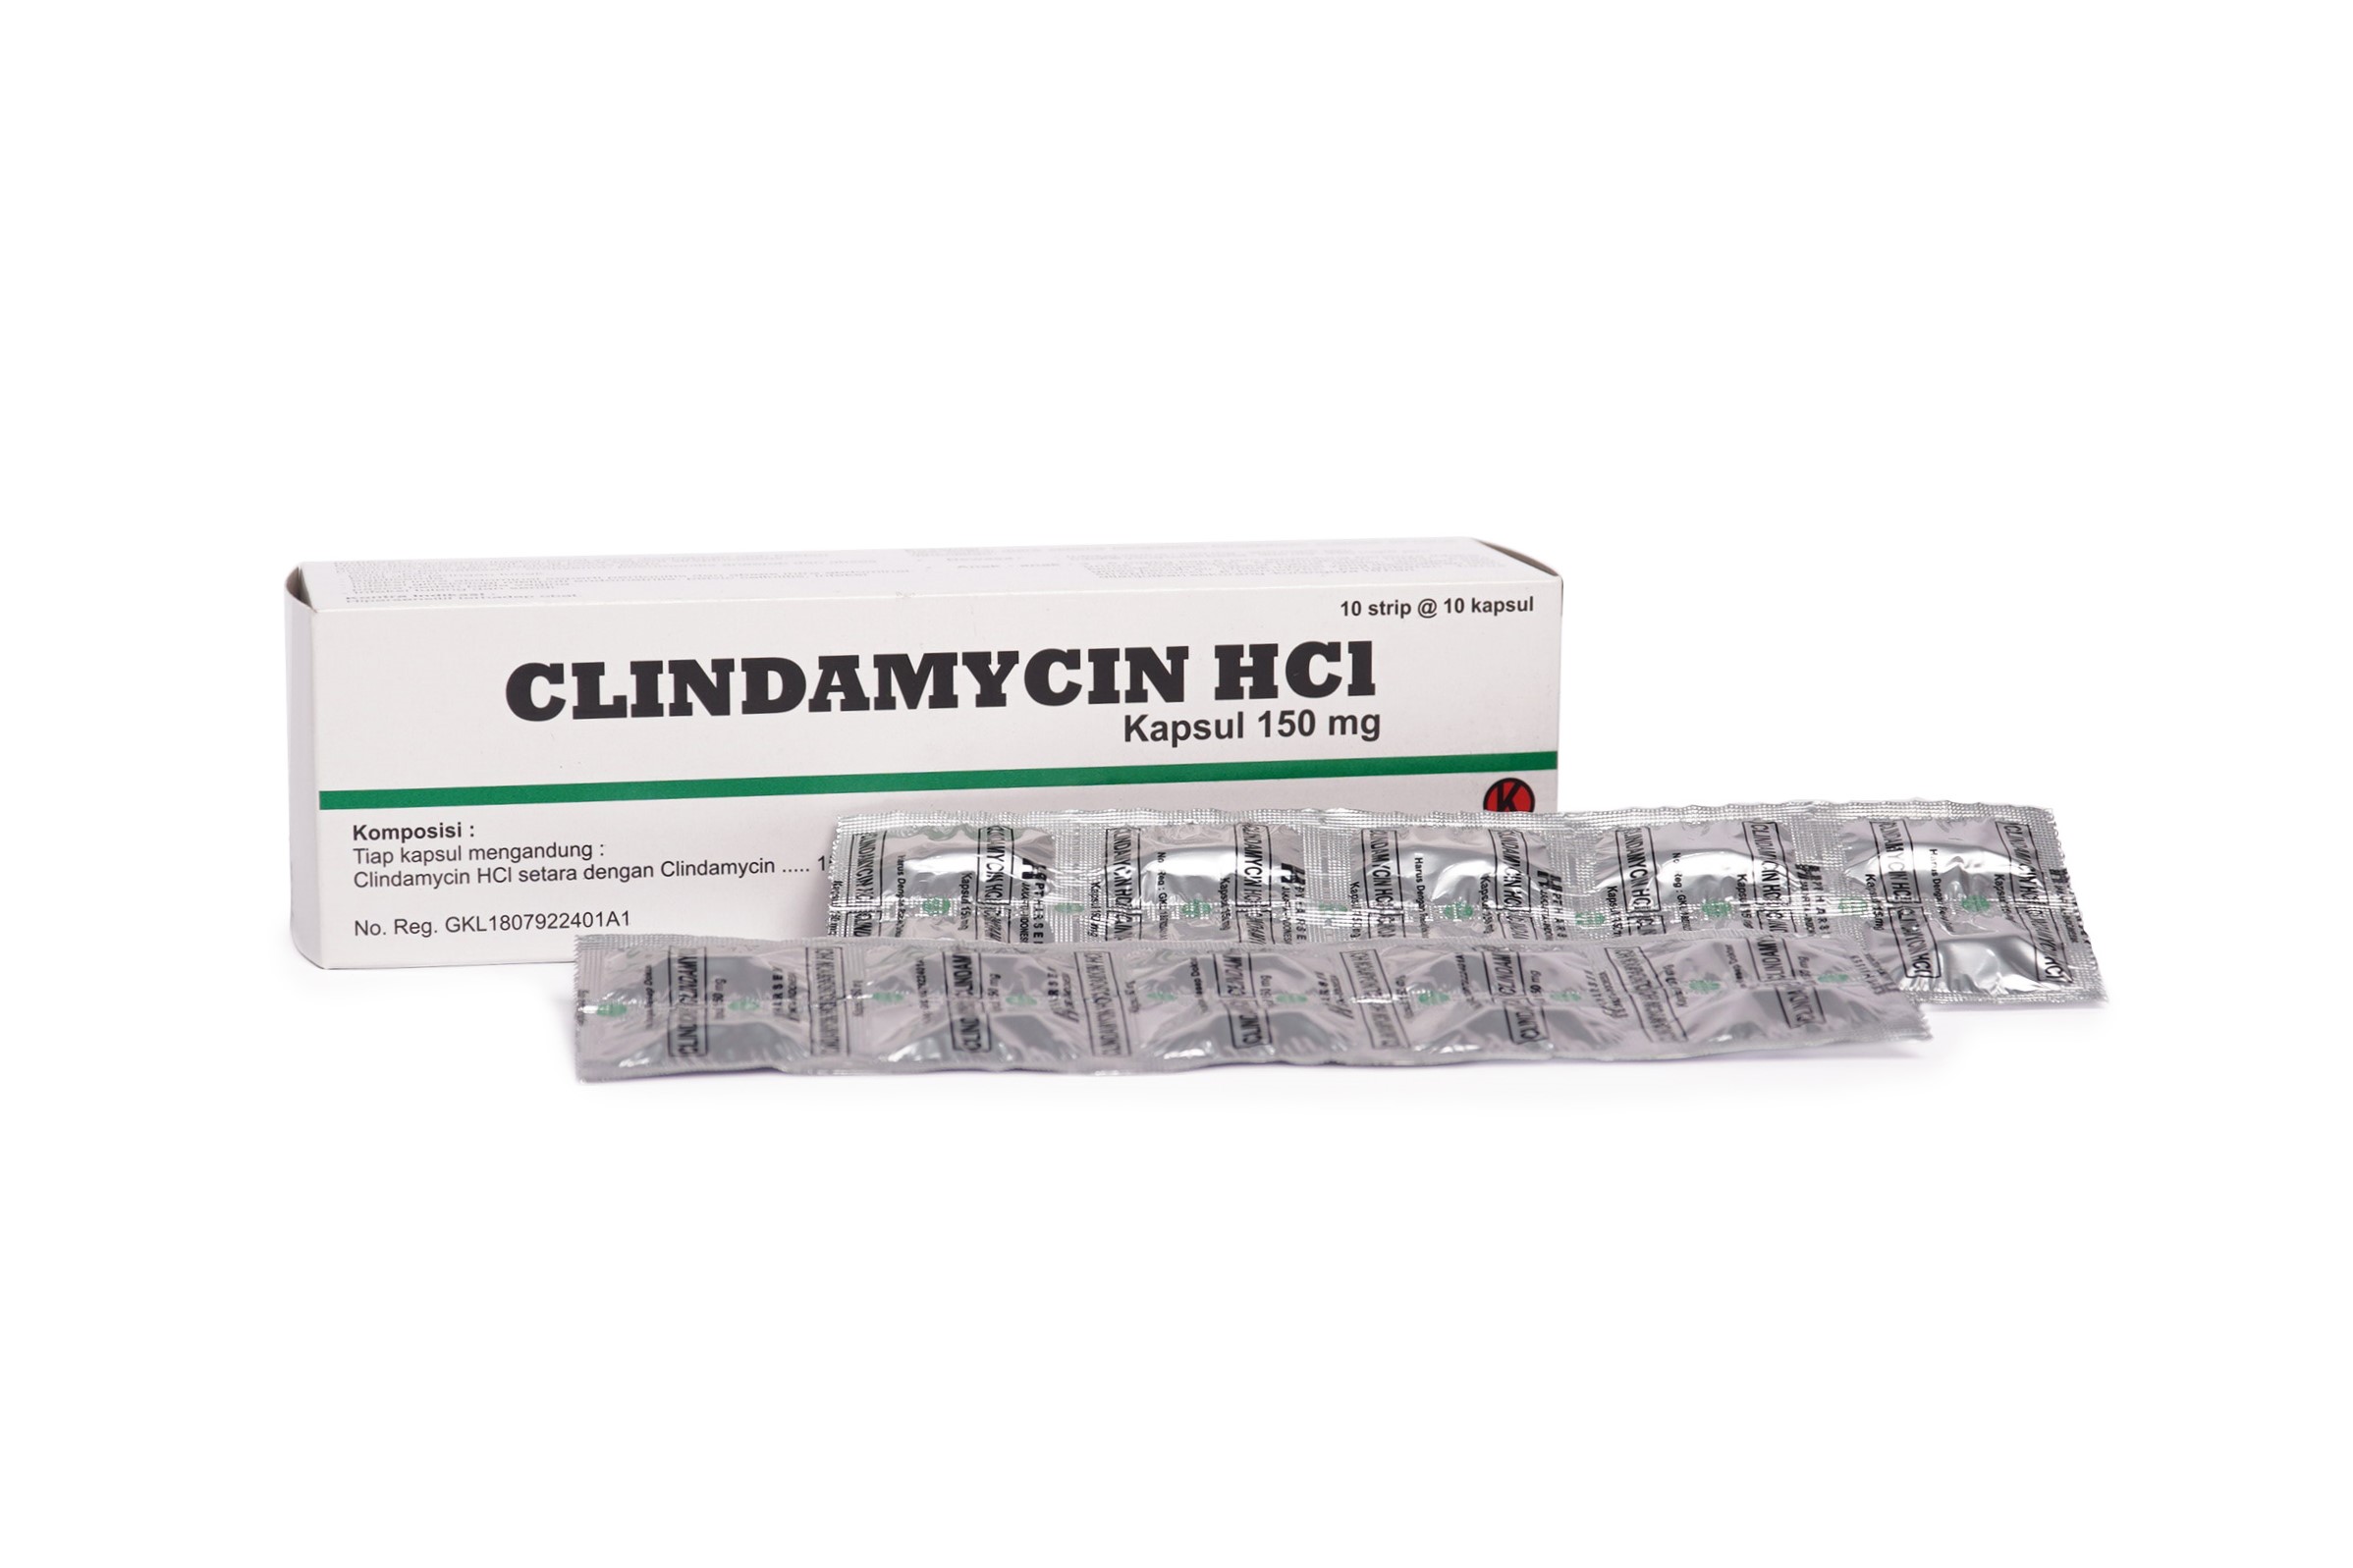 Clindamycin HCL